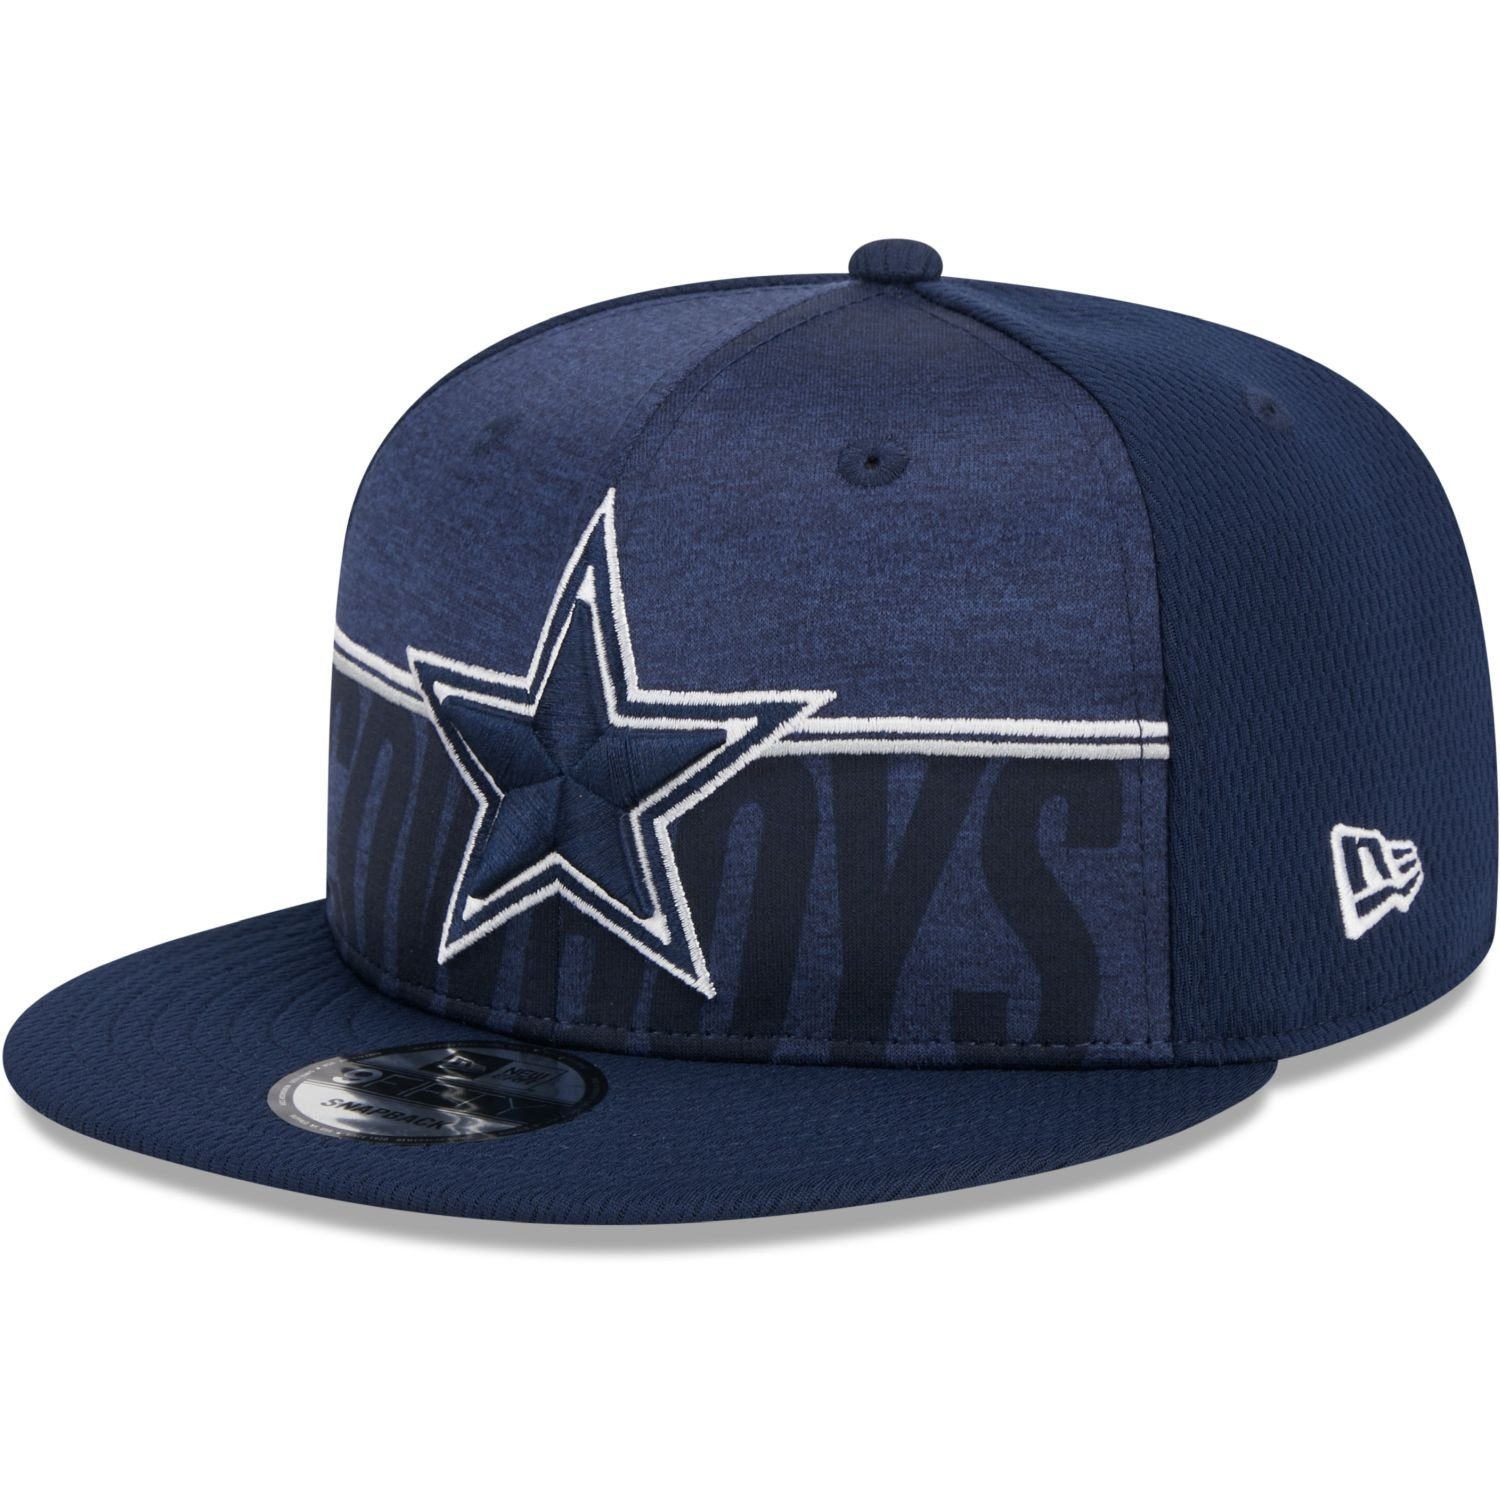 New Era Snapback Cap 9FIFTY TRAINING Dallas Cowboys